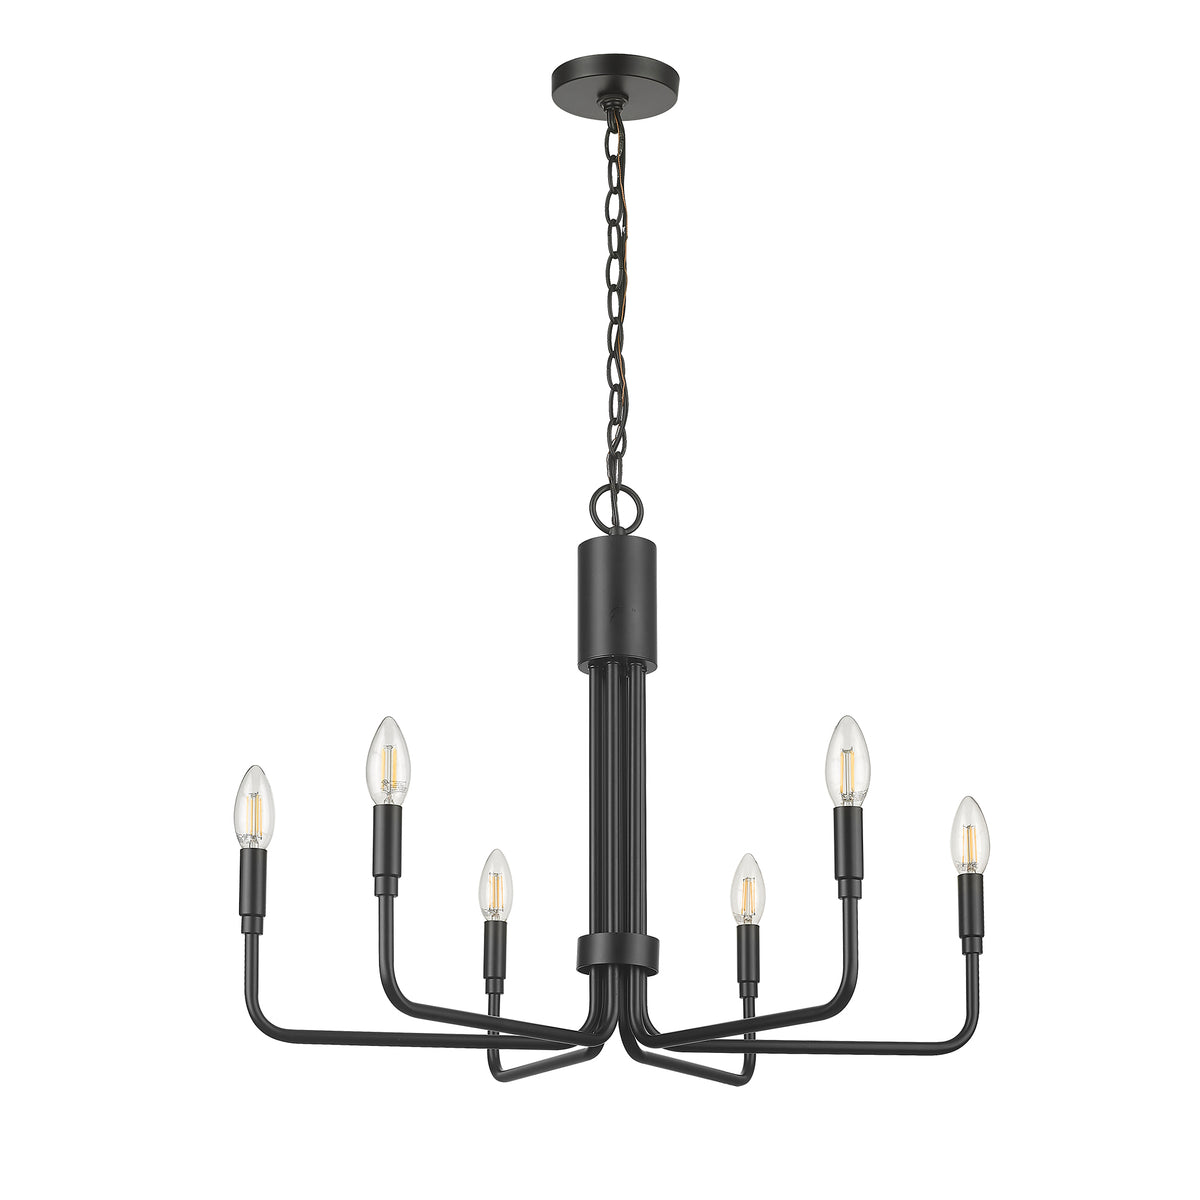 6-light black matte modern candle style chandelier